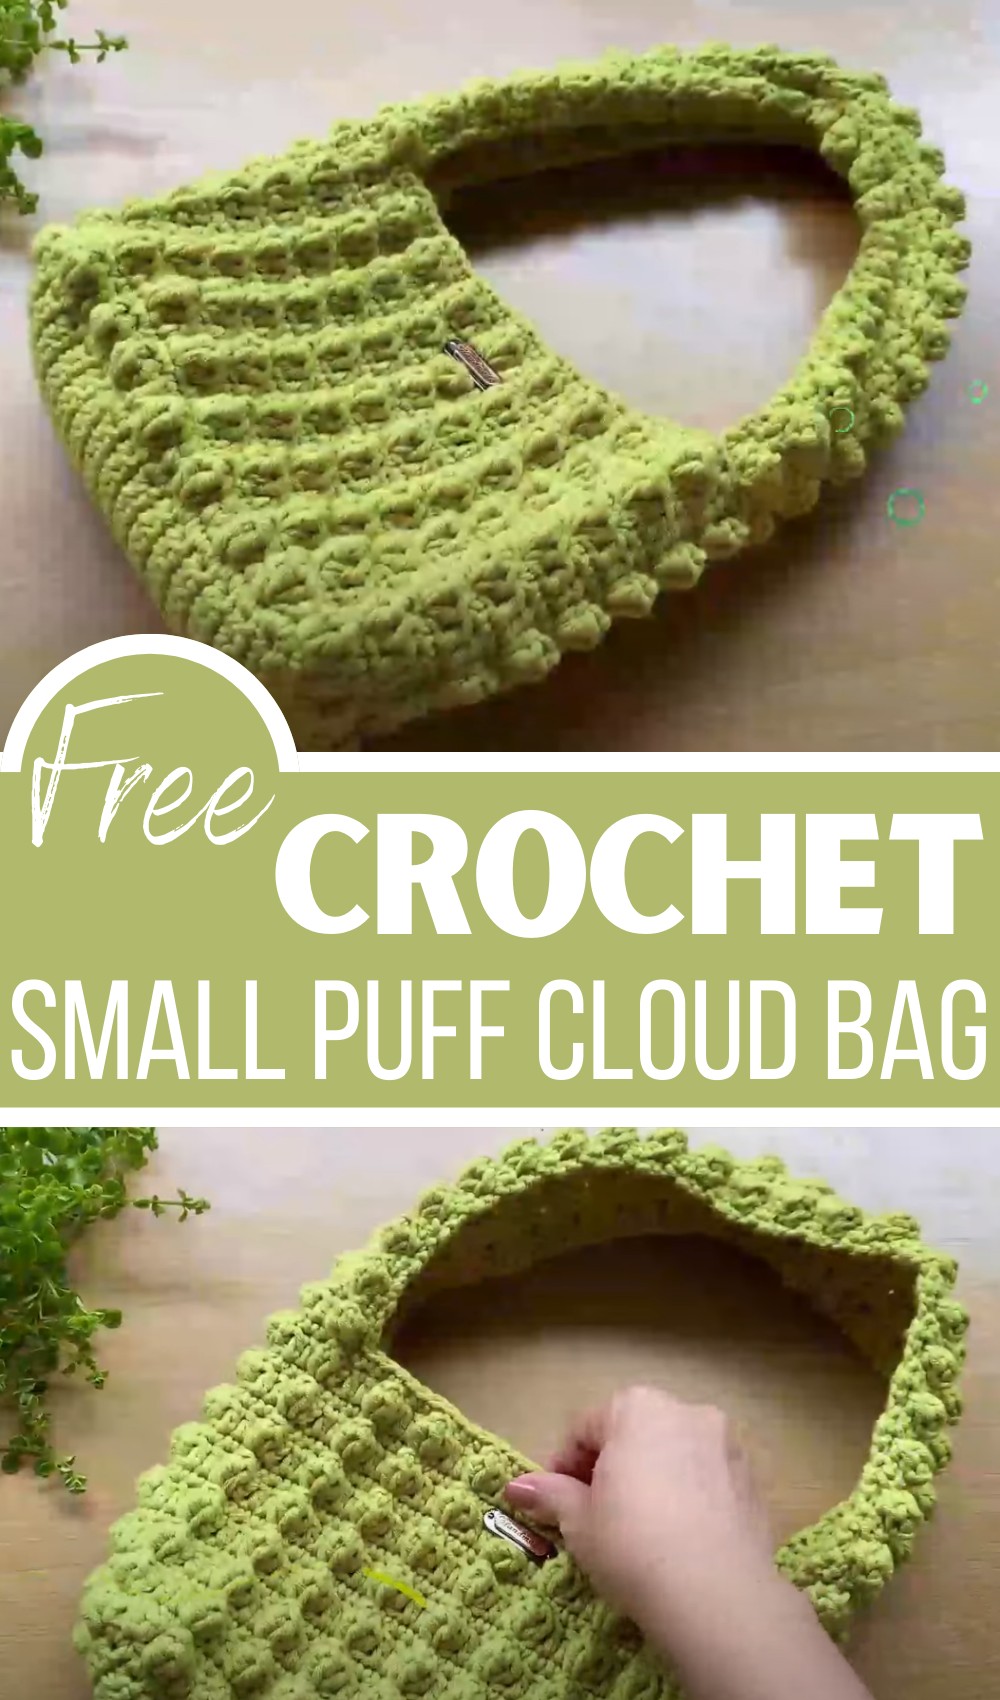 Crochet Small Puff Cloud Bag